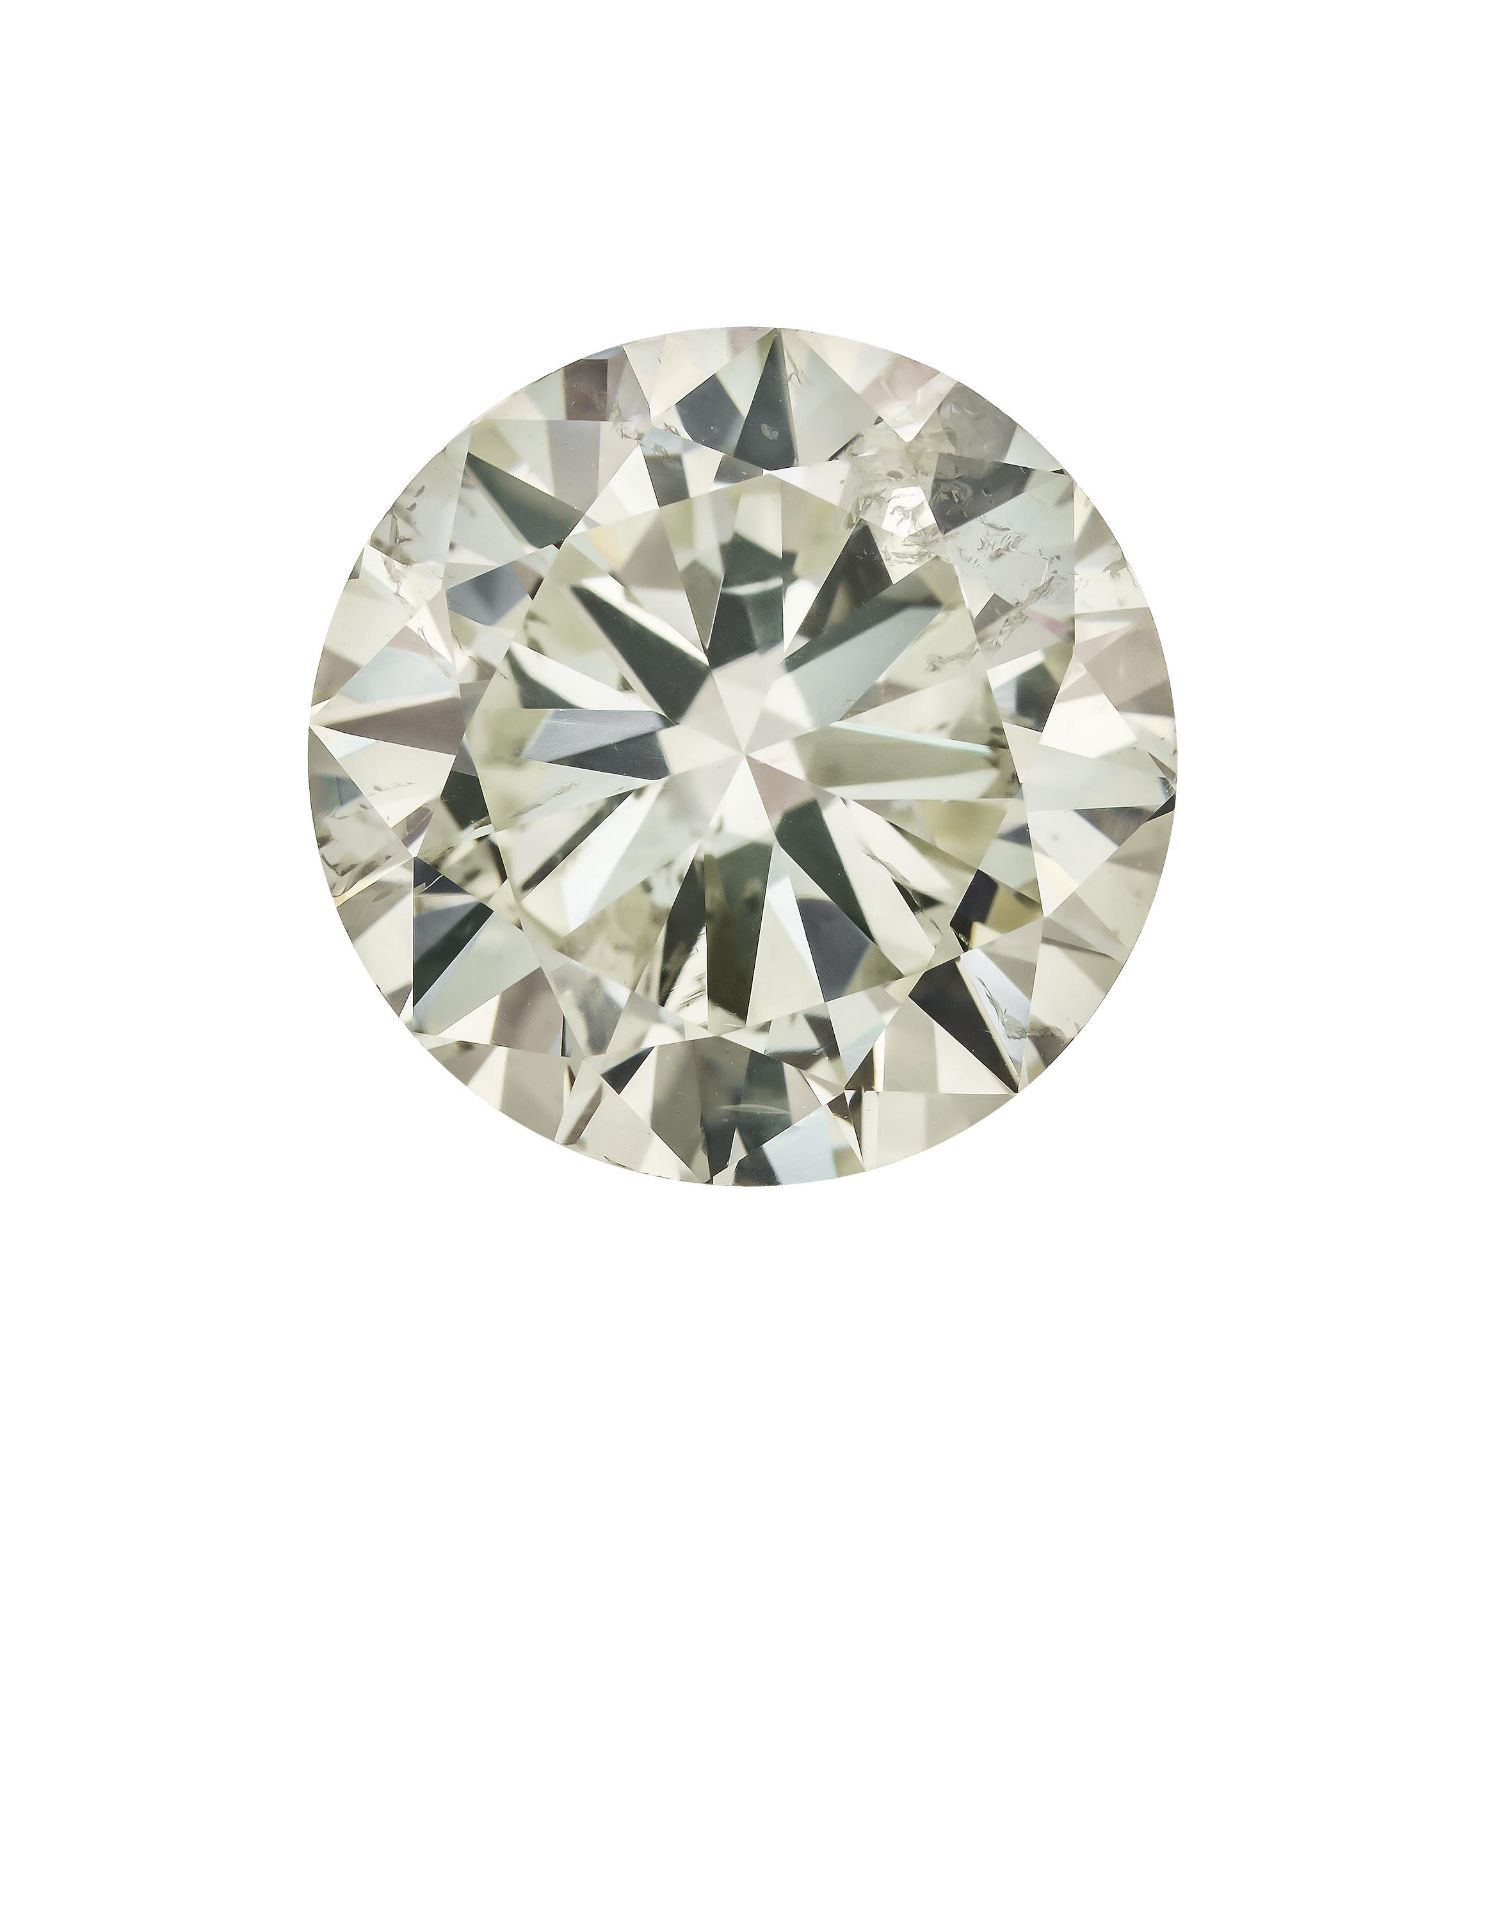 Loose-Brilliant-Cut-Diamond - Image 2 of 4